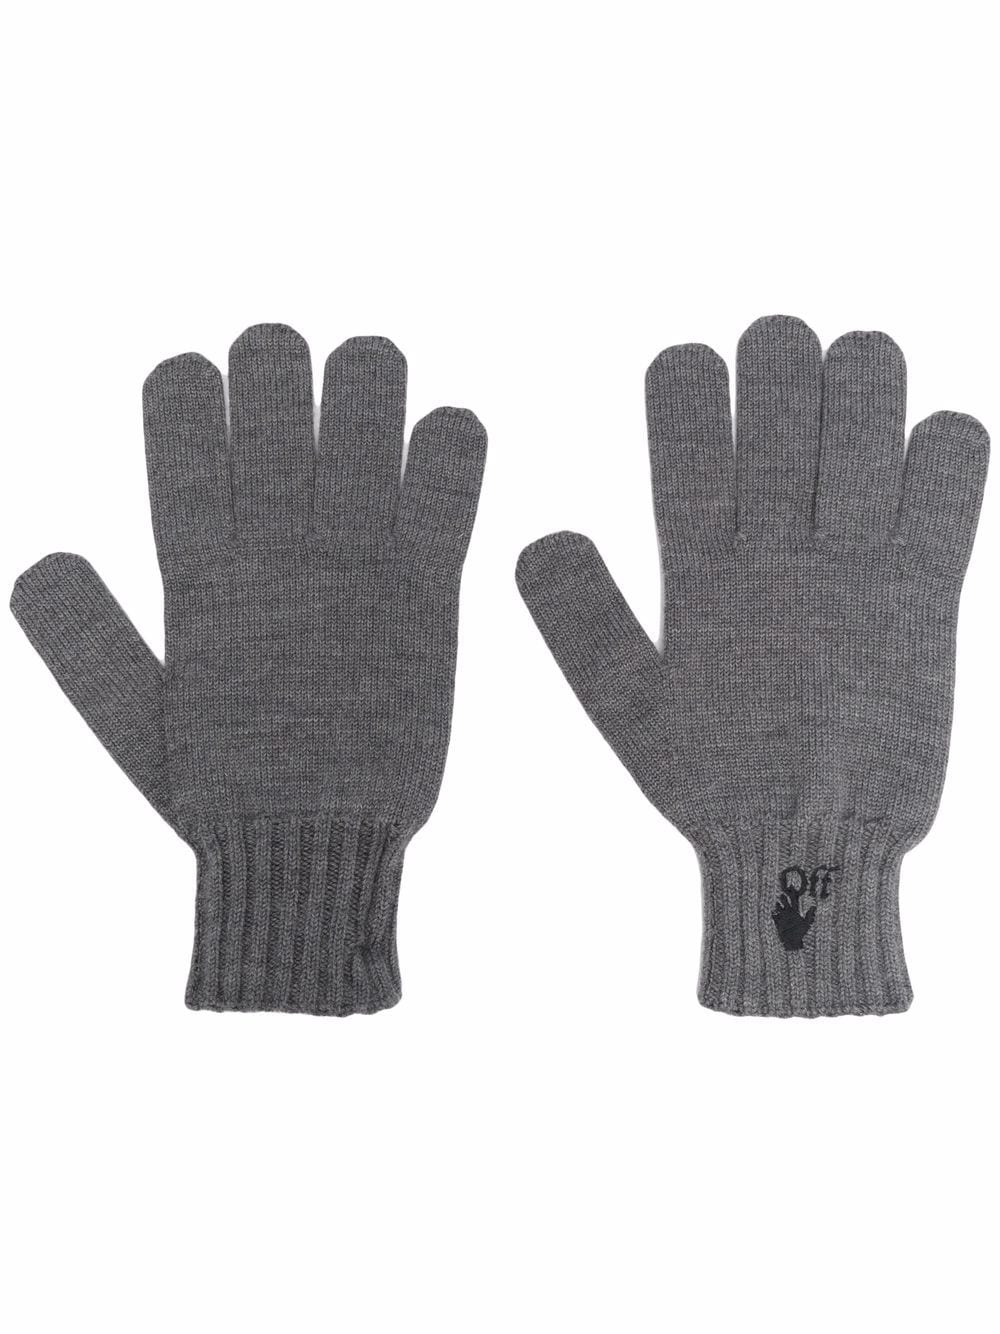 Hand Off logo gloves